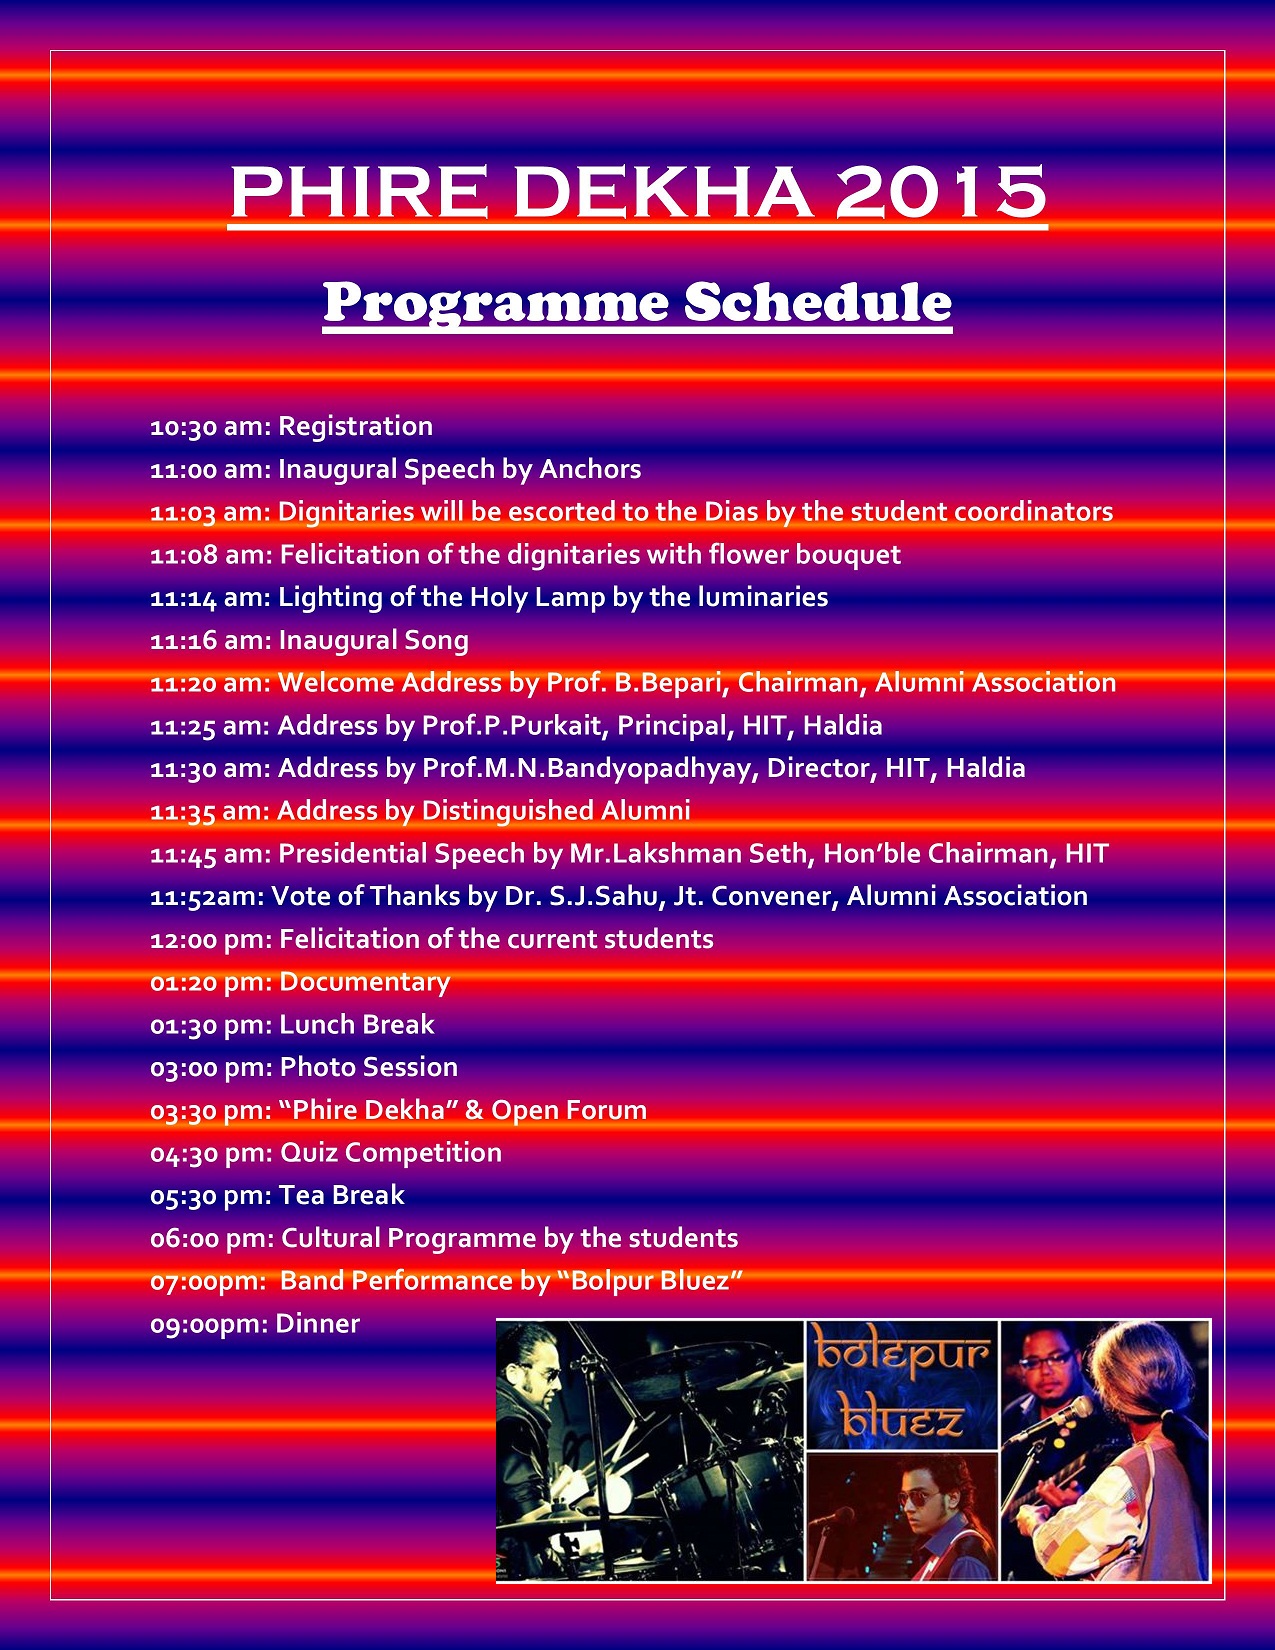 Detailed_programme_schedule_of_PHIRE_DEKHA_2015